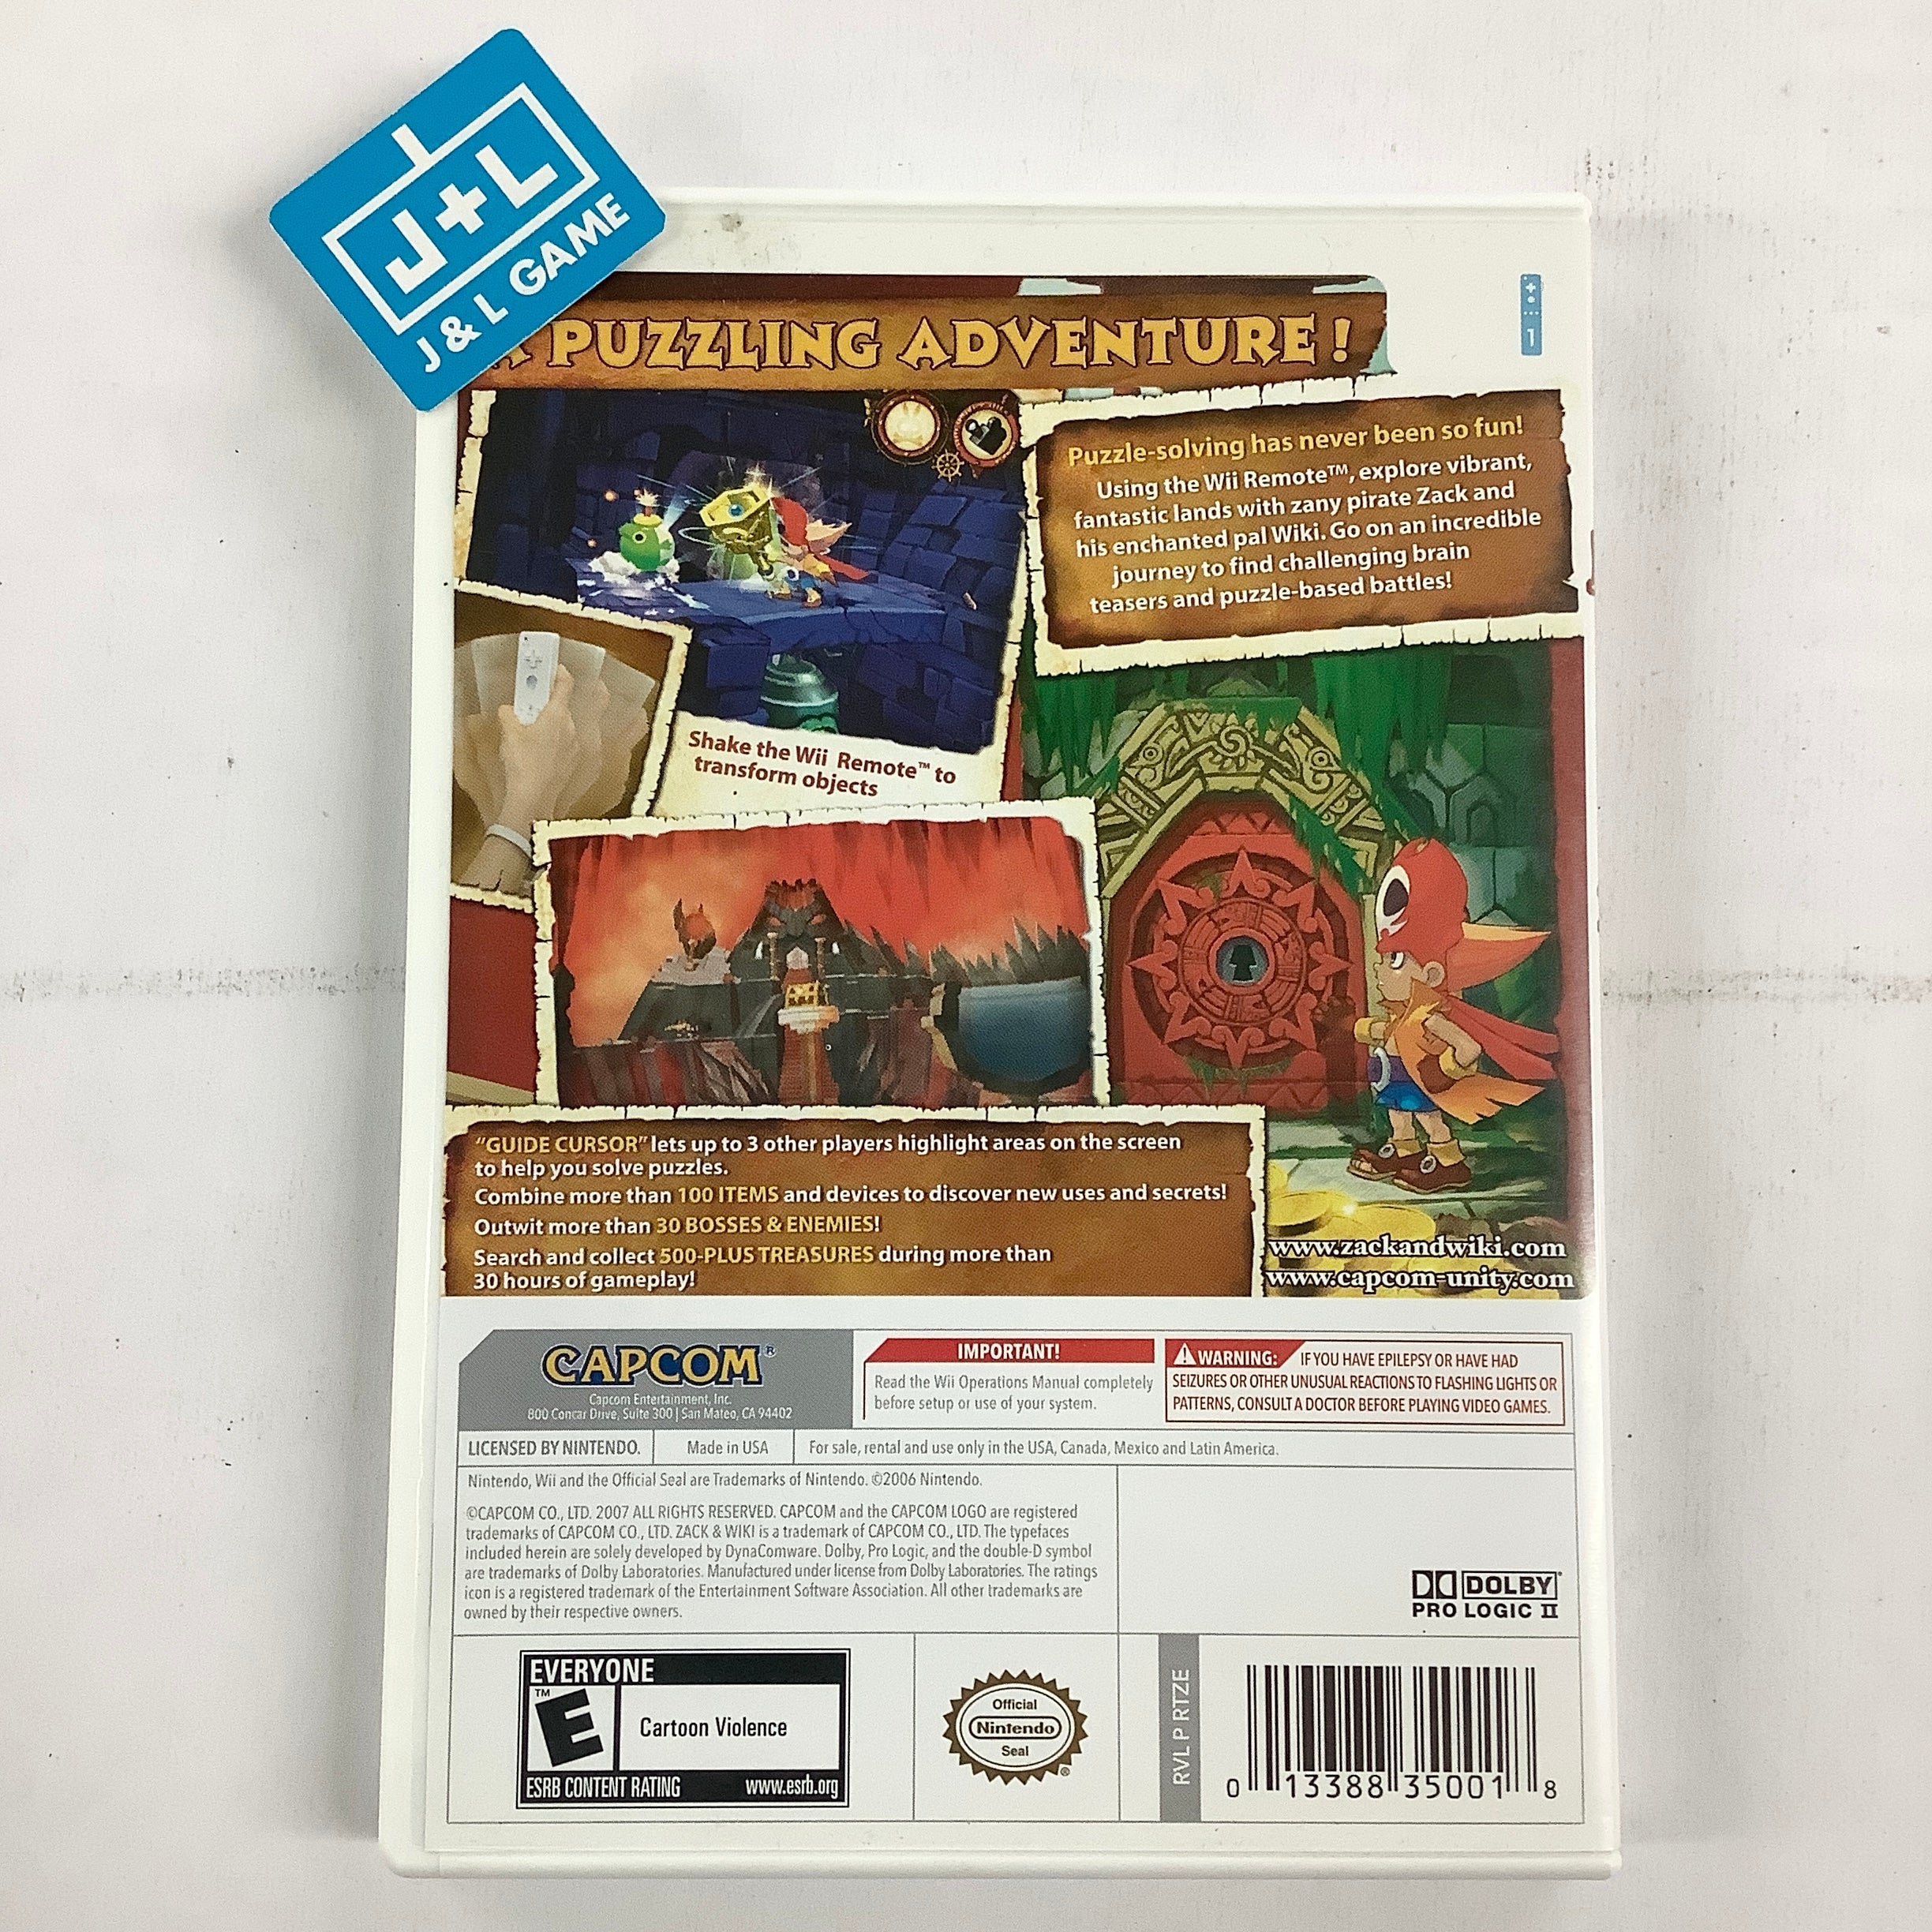 Zack & Wiki: Quest for Barbaros' Treasure - Nintendo Wii [Pre-Owned] Video Games Capcom   